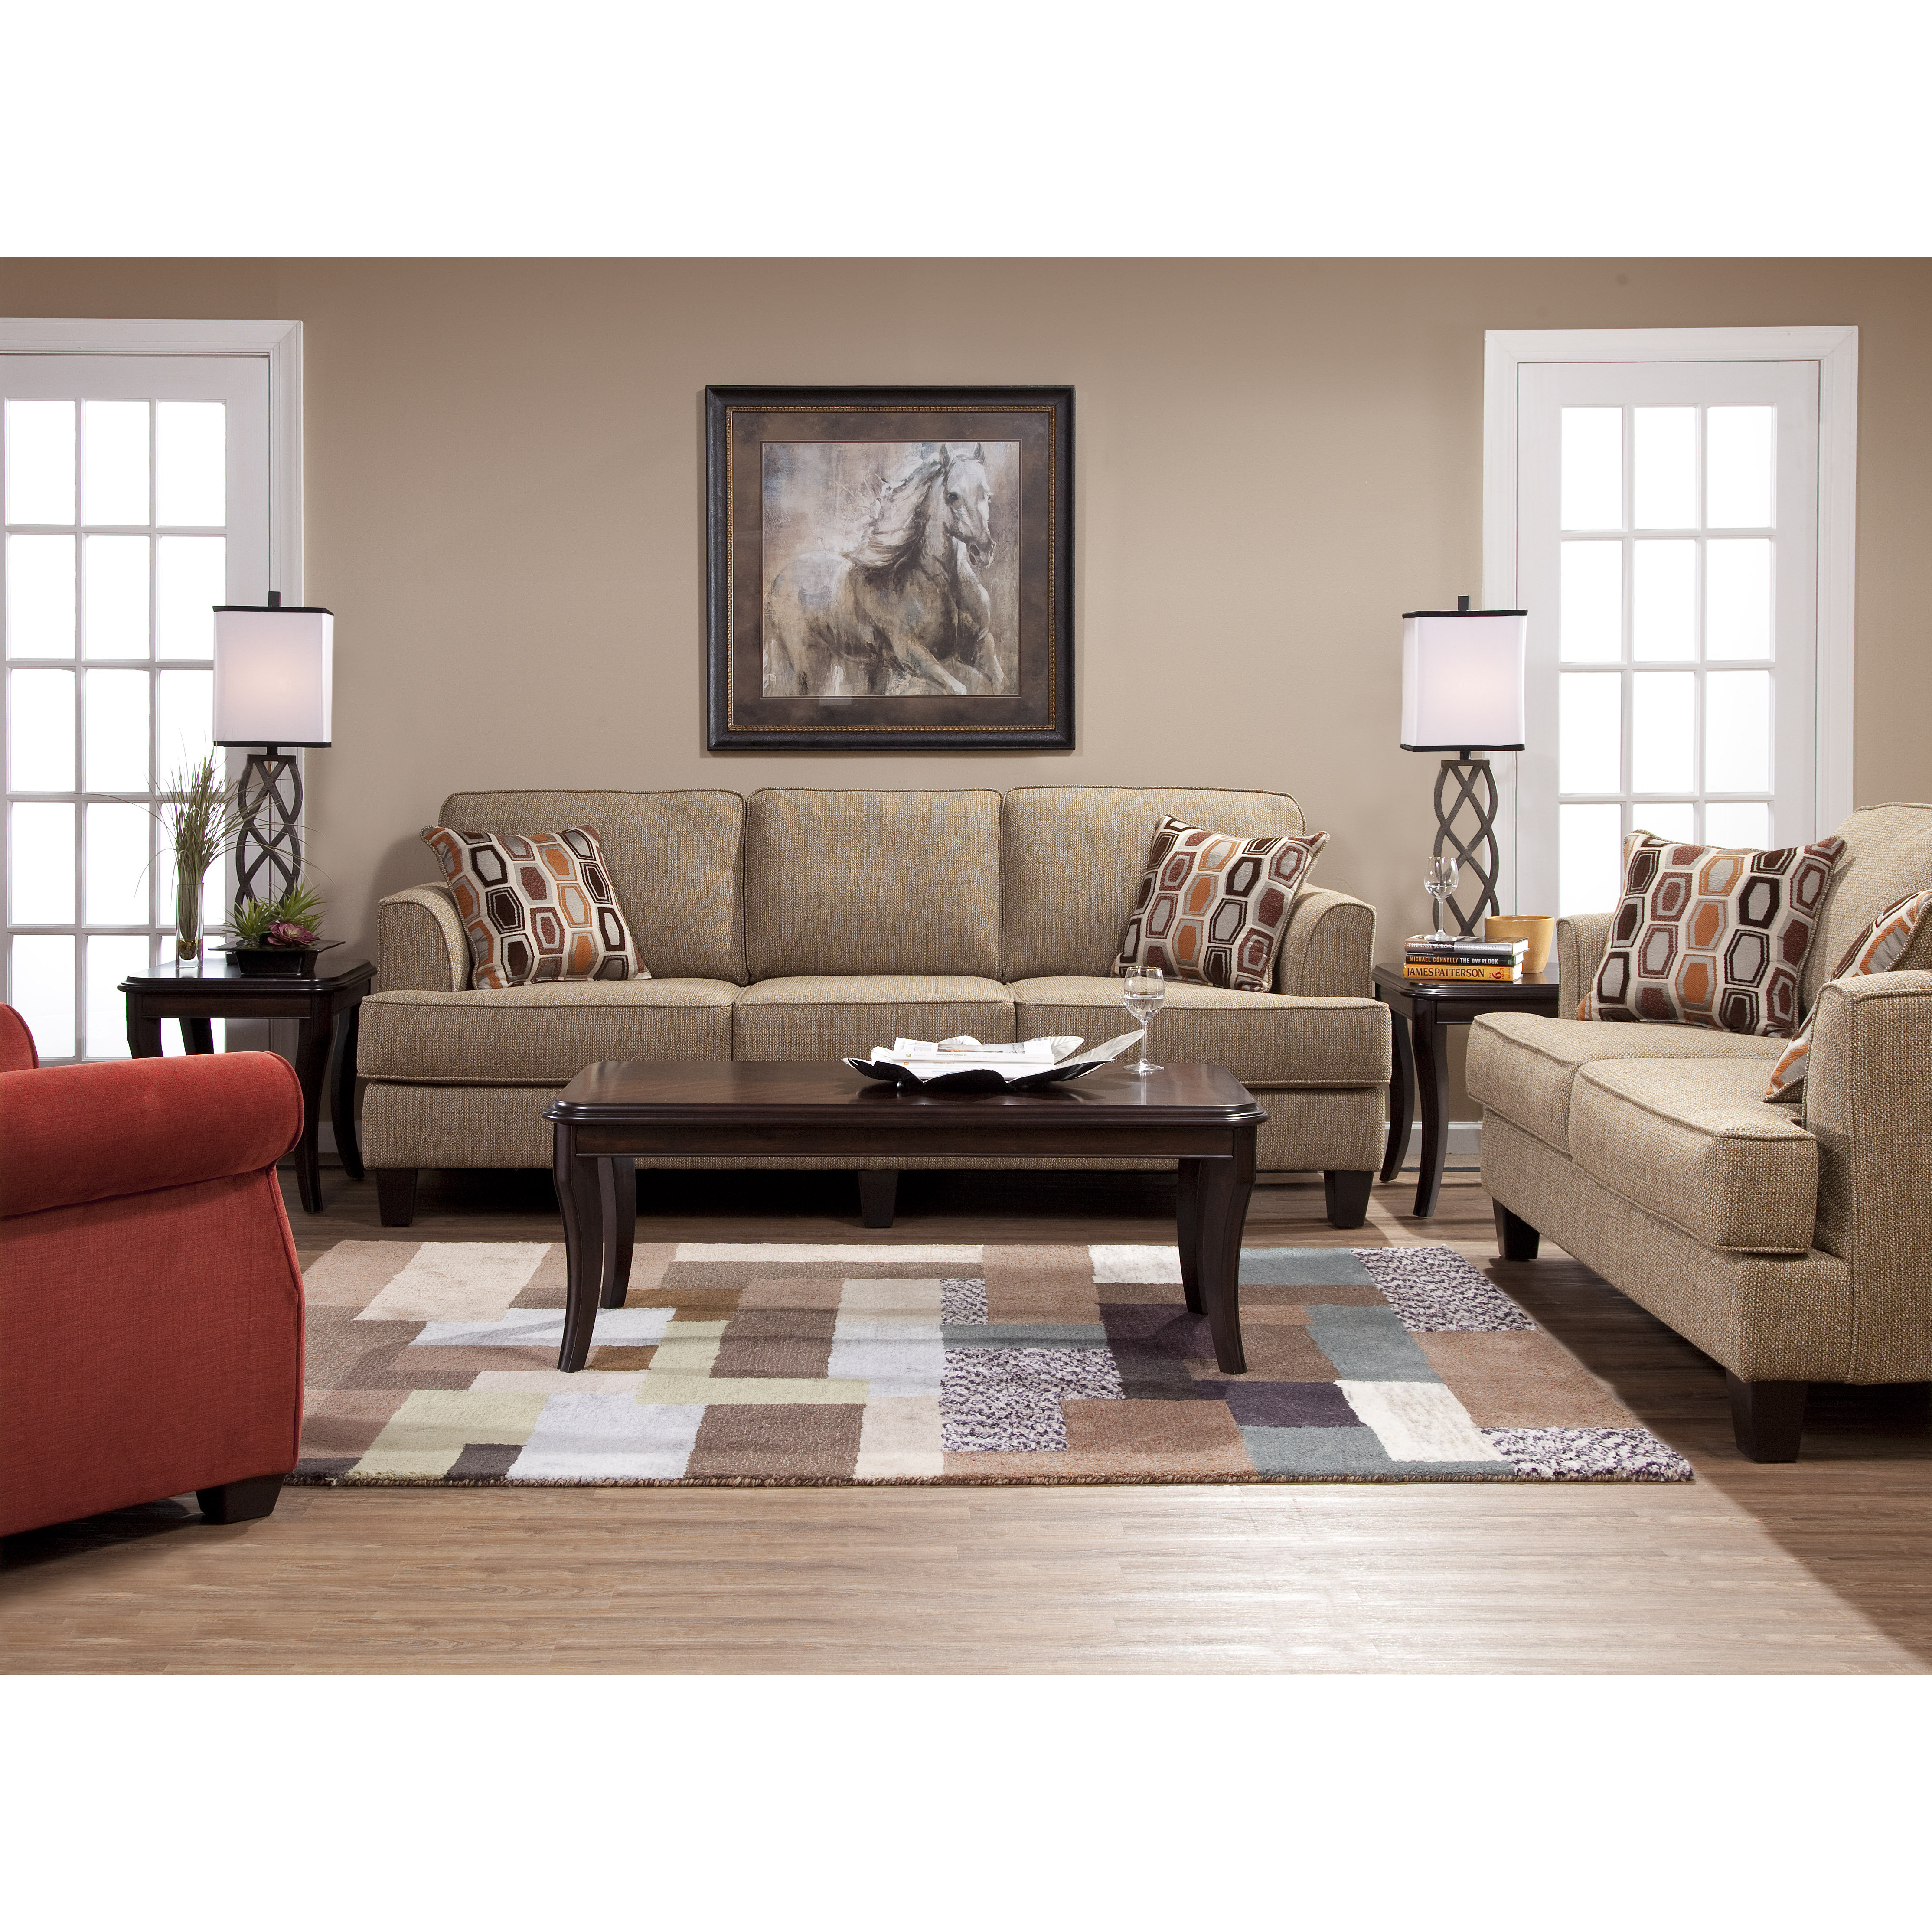 Red Barrel Studio Serta Upholstery Dallas Living Room Collection \u0026 Reviews  Wayfair